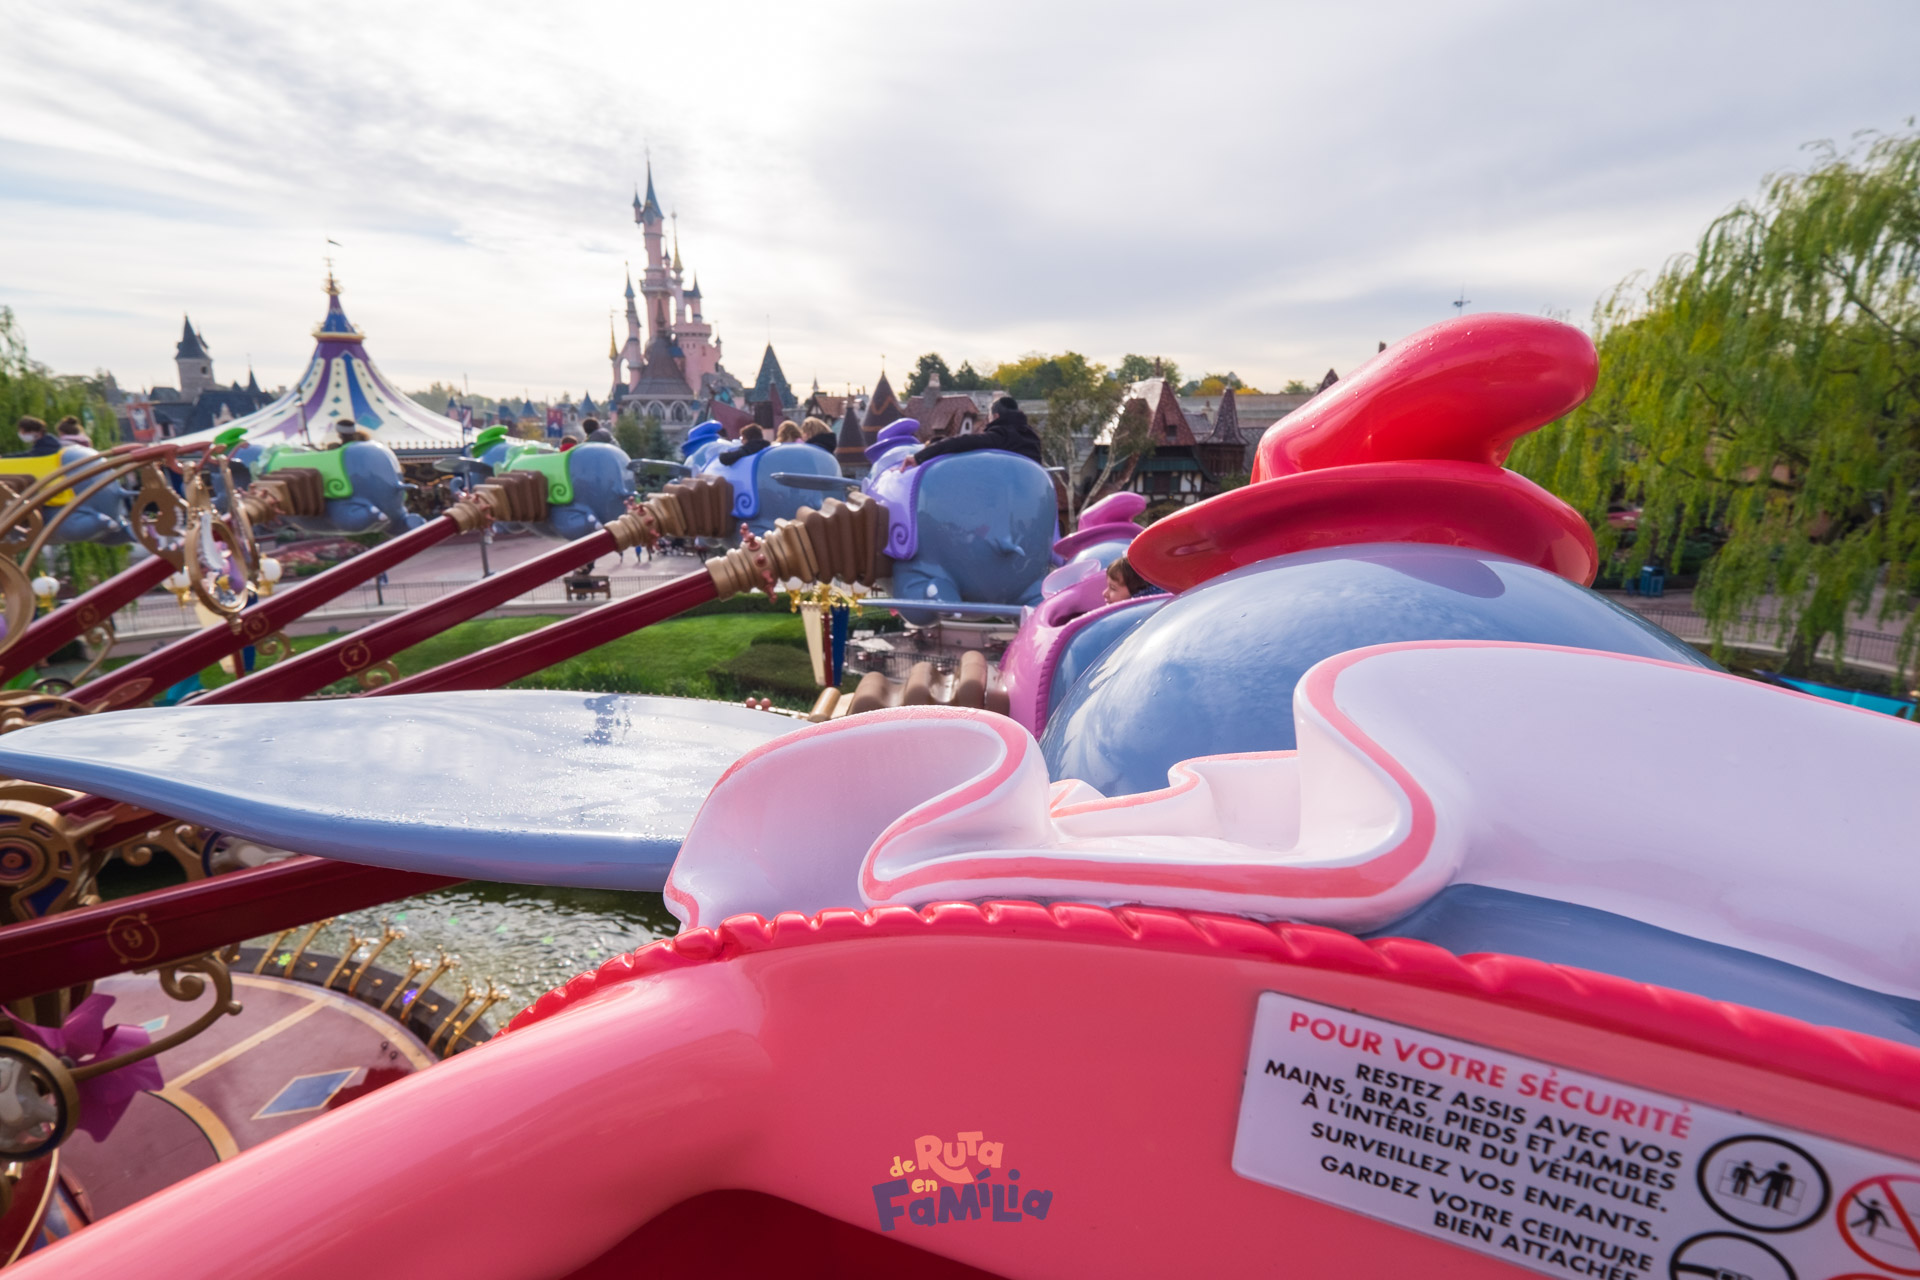 Las mejores atracciones de Disneyland Paris. Dumbo the Flying Elephant